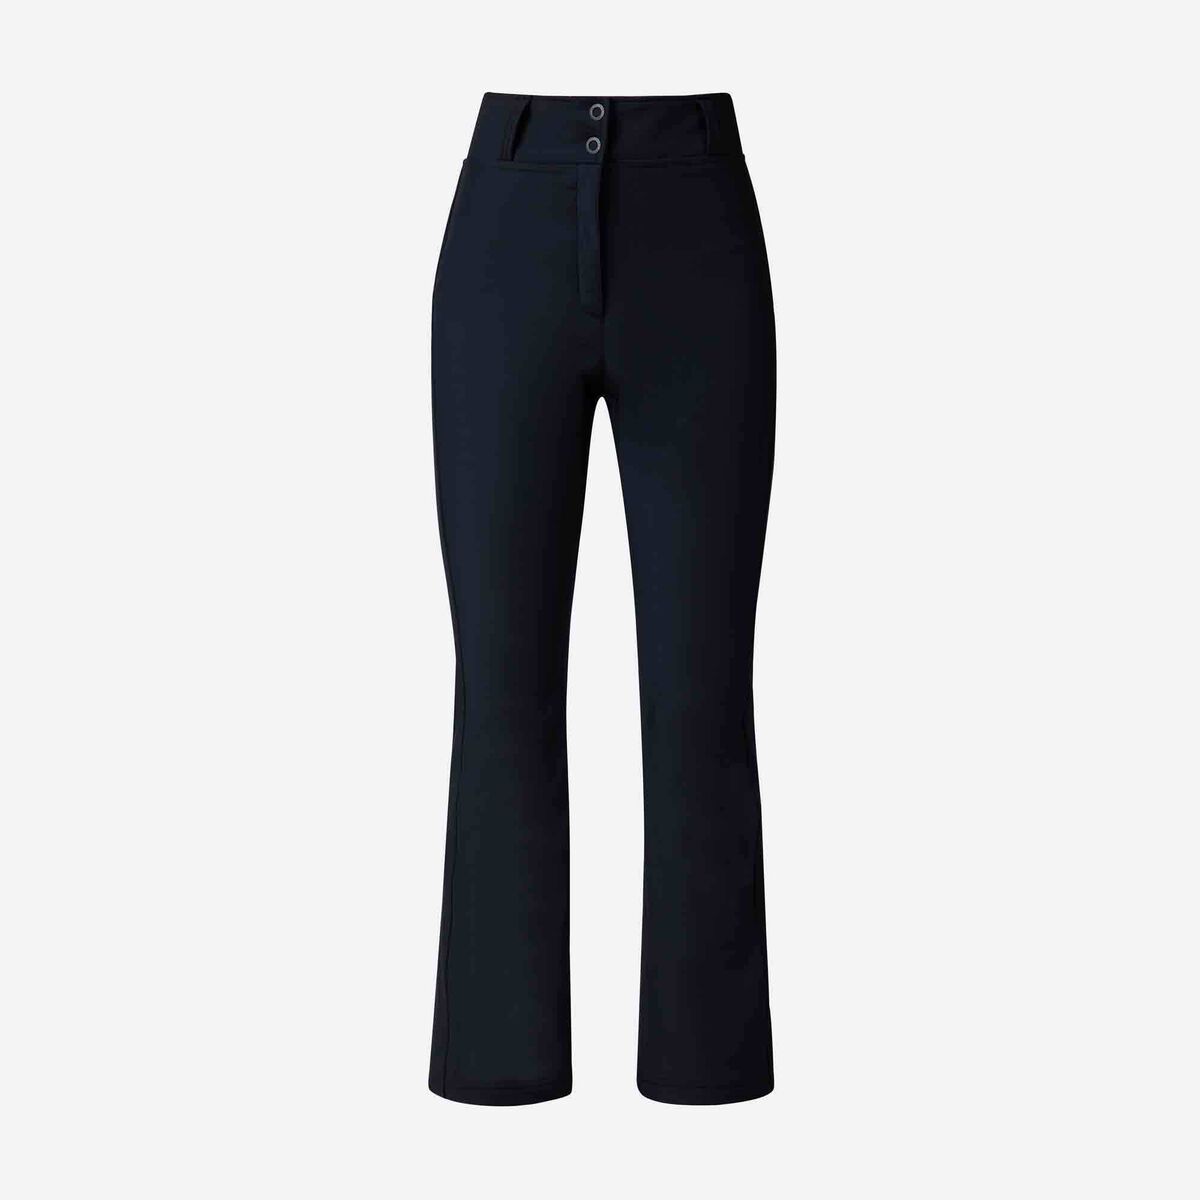 Comfort Grey Flare Pants, Women's Flare Pants